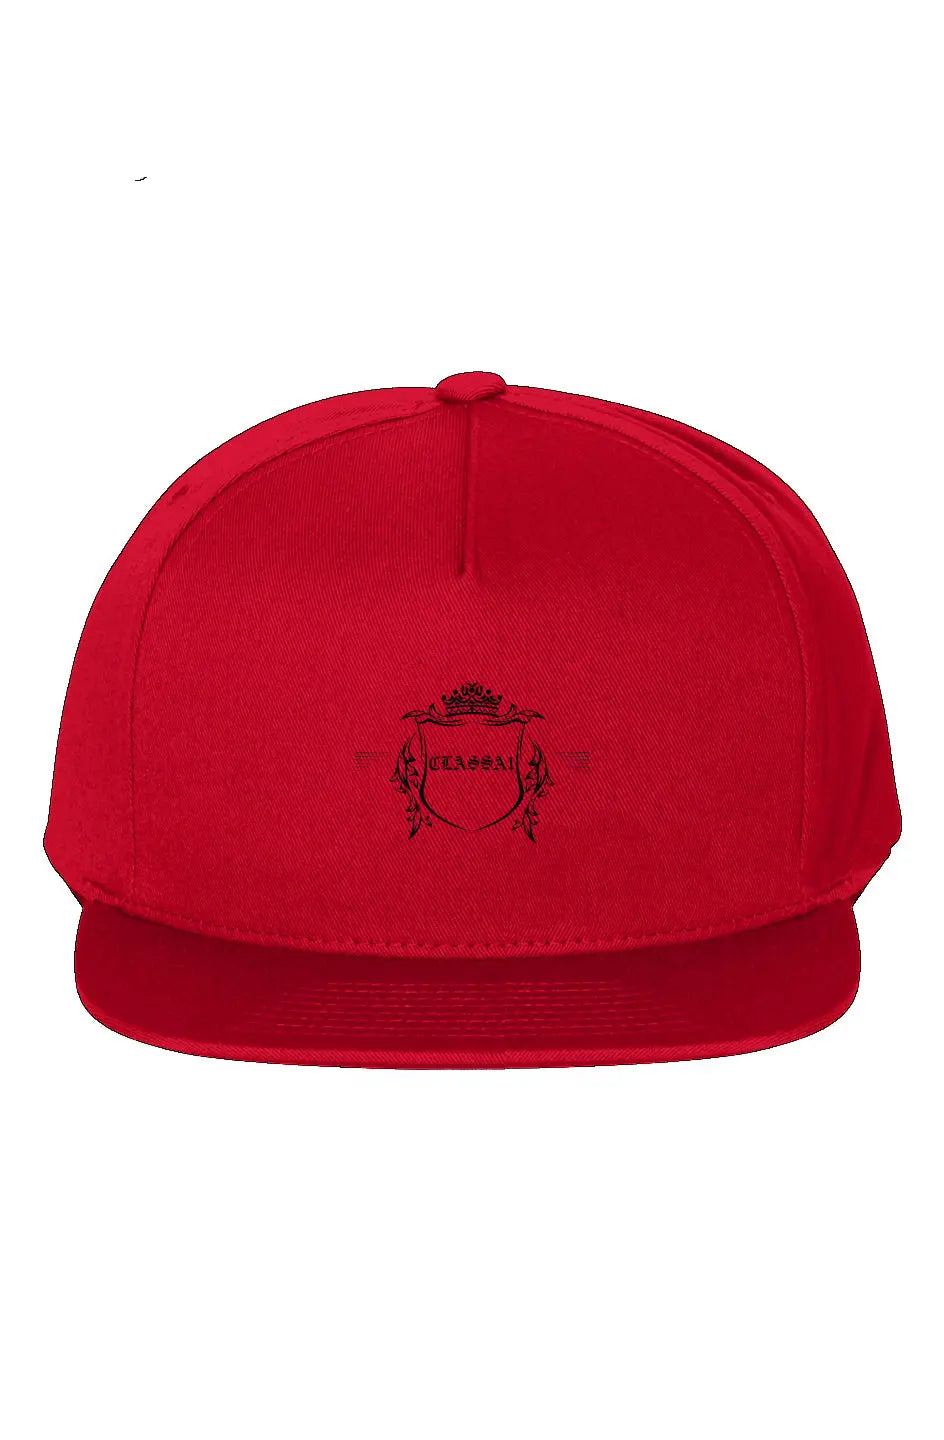 One Size red - ClassA1 Emblem 5-Panel Cotton Twill Snapback Cap - hats at TFC&H Co.